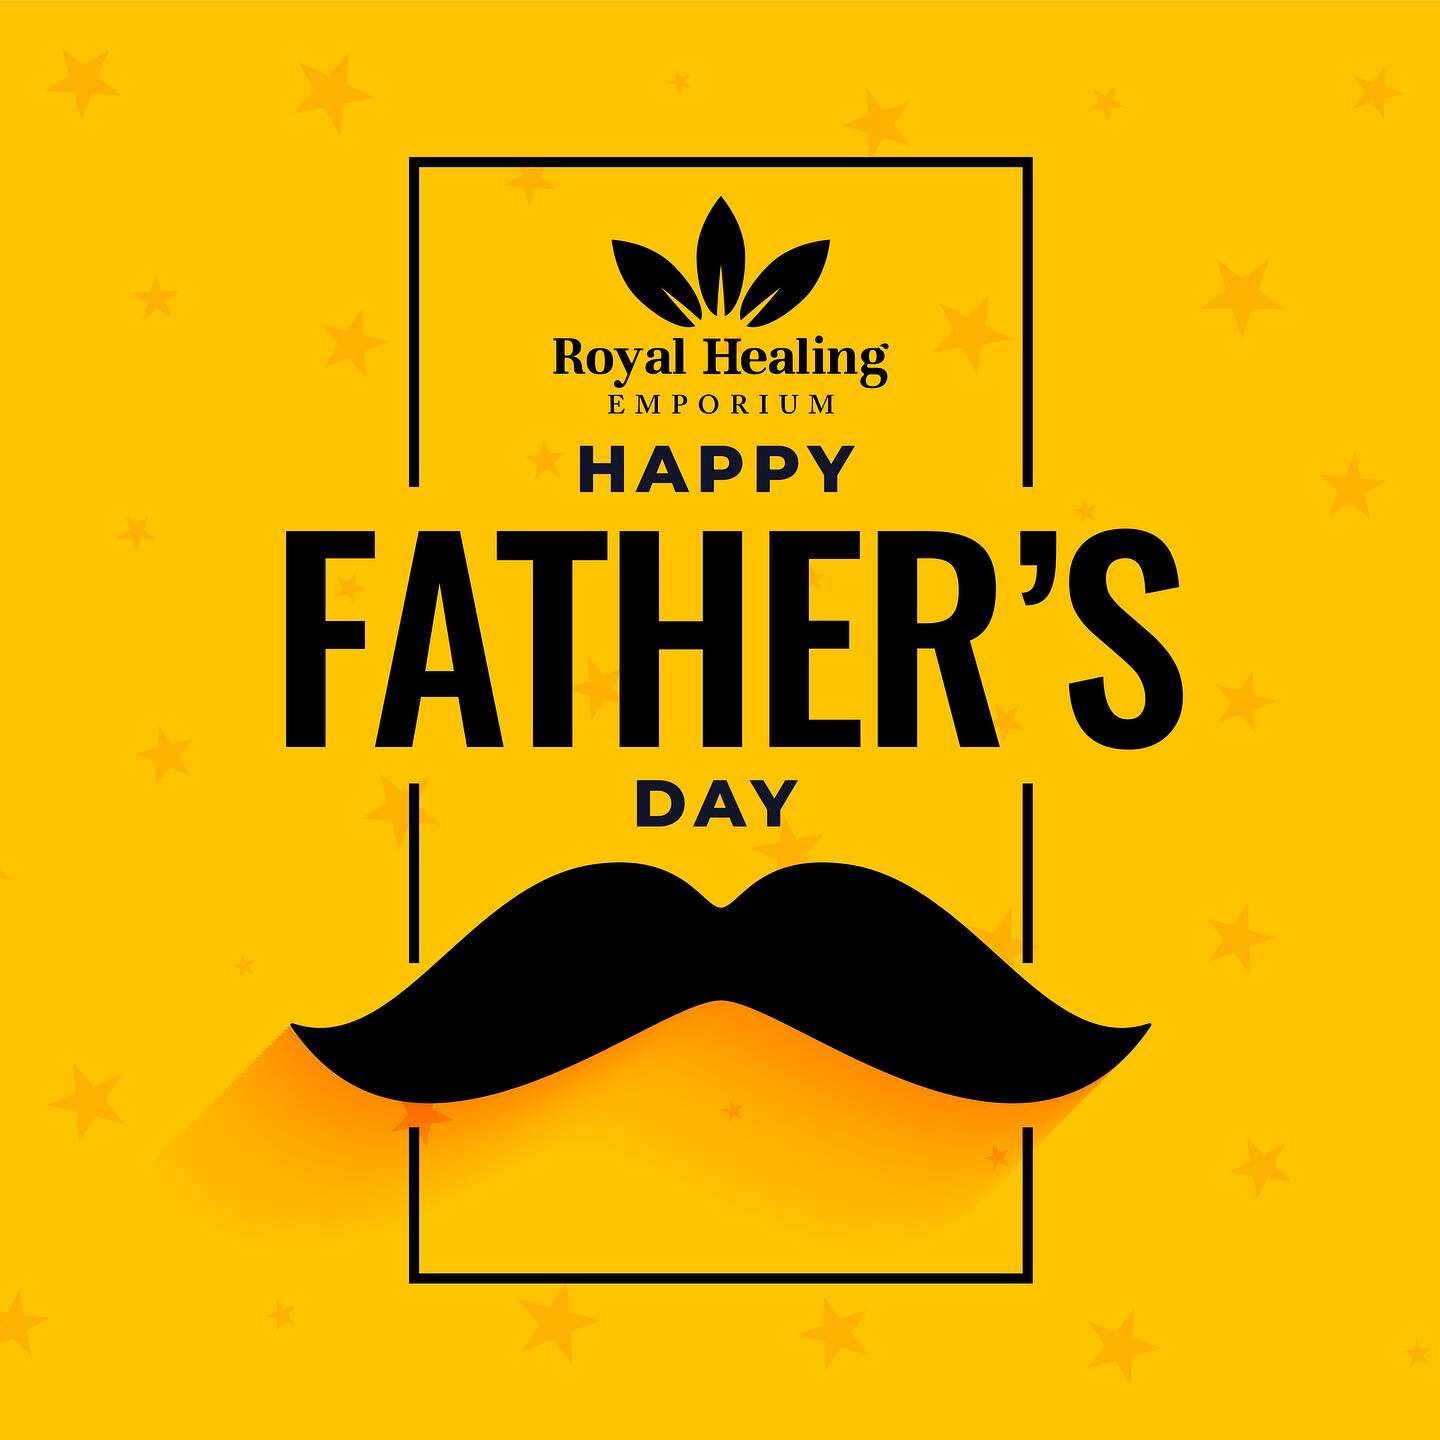 Wishing everyone a very happy Father&rsquo;s Day! 👨&zwj;👦#royalhealingemporium